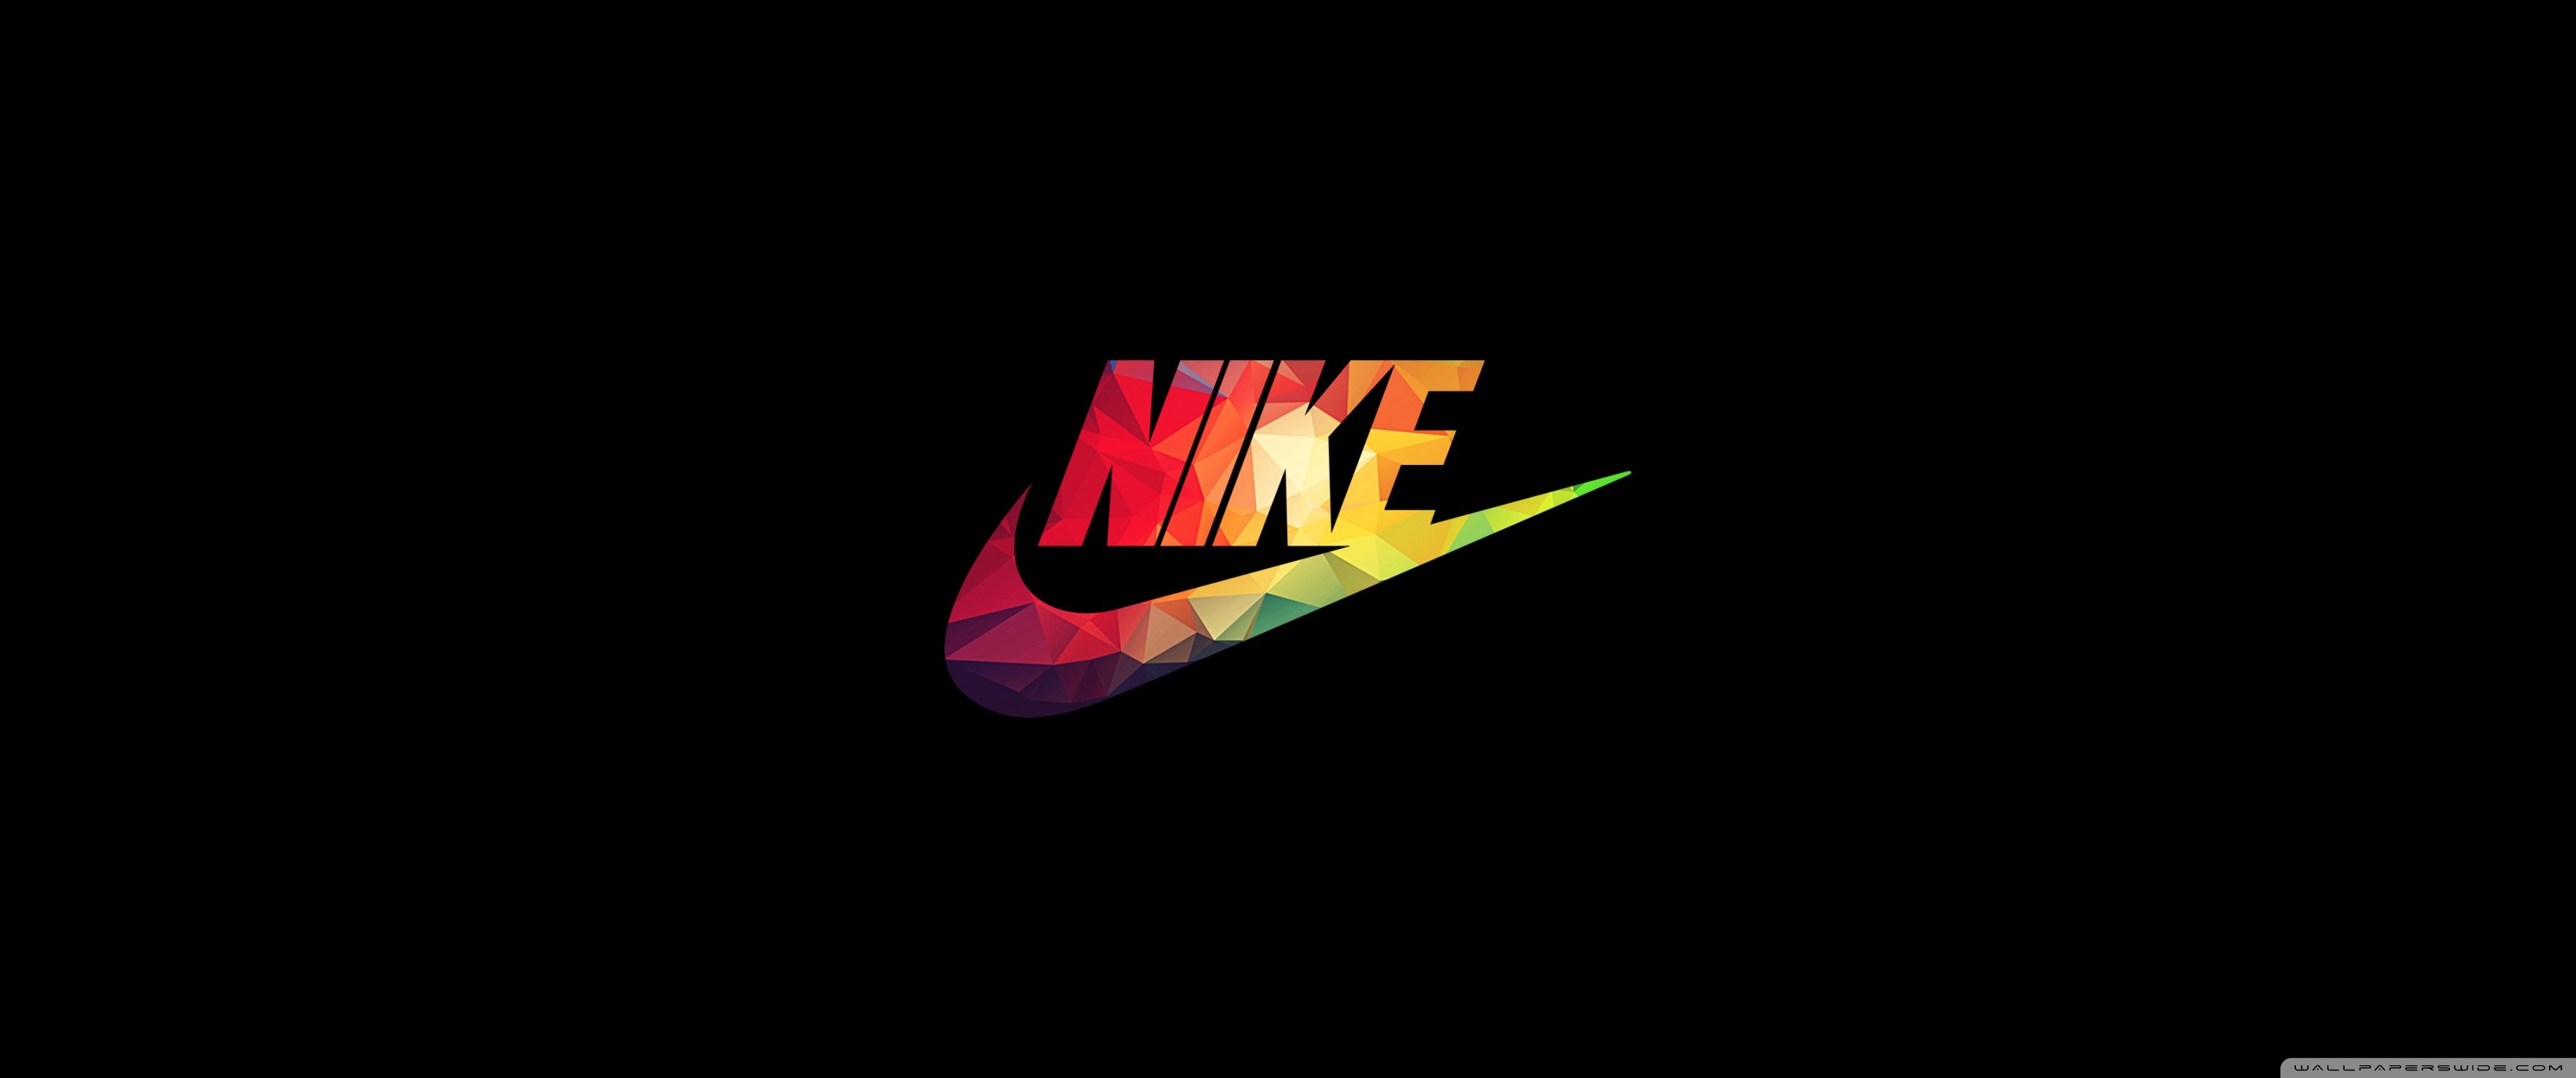 Nike Surf Wallpapers ·① WallpaperTag